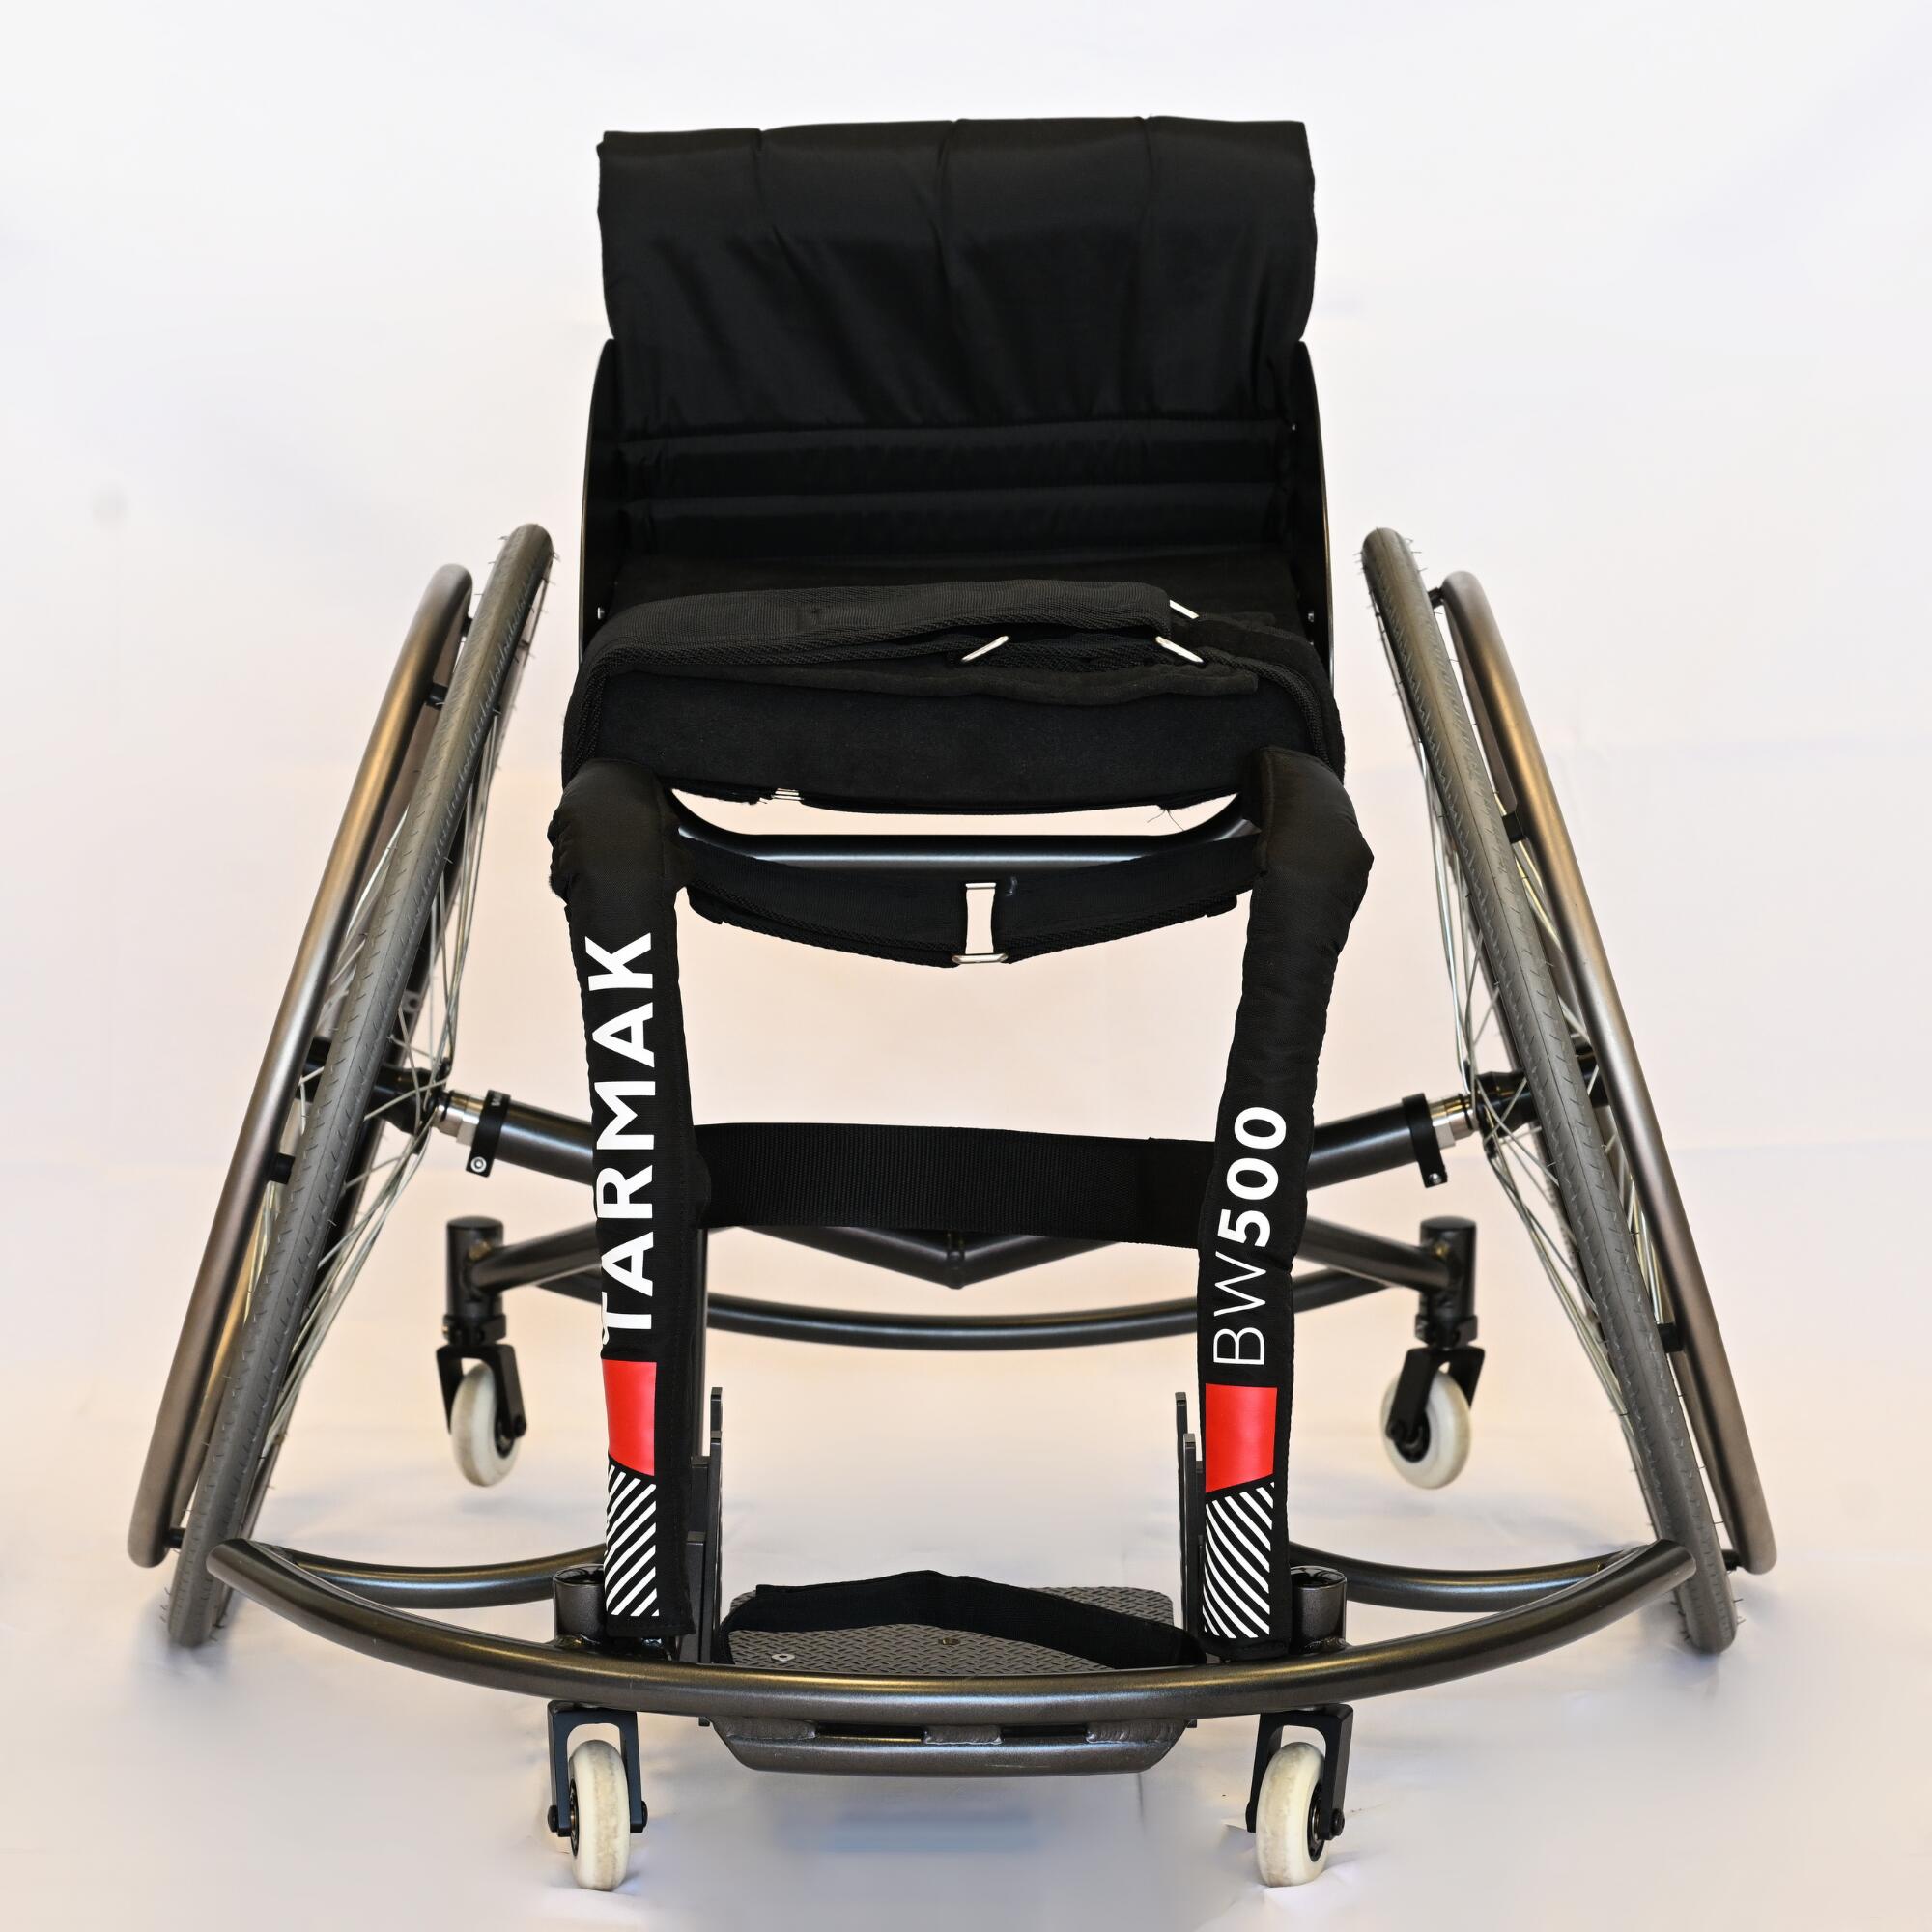 DECATHLON Adjustable Basketball Wheelchair BW500 - 24"